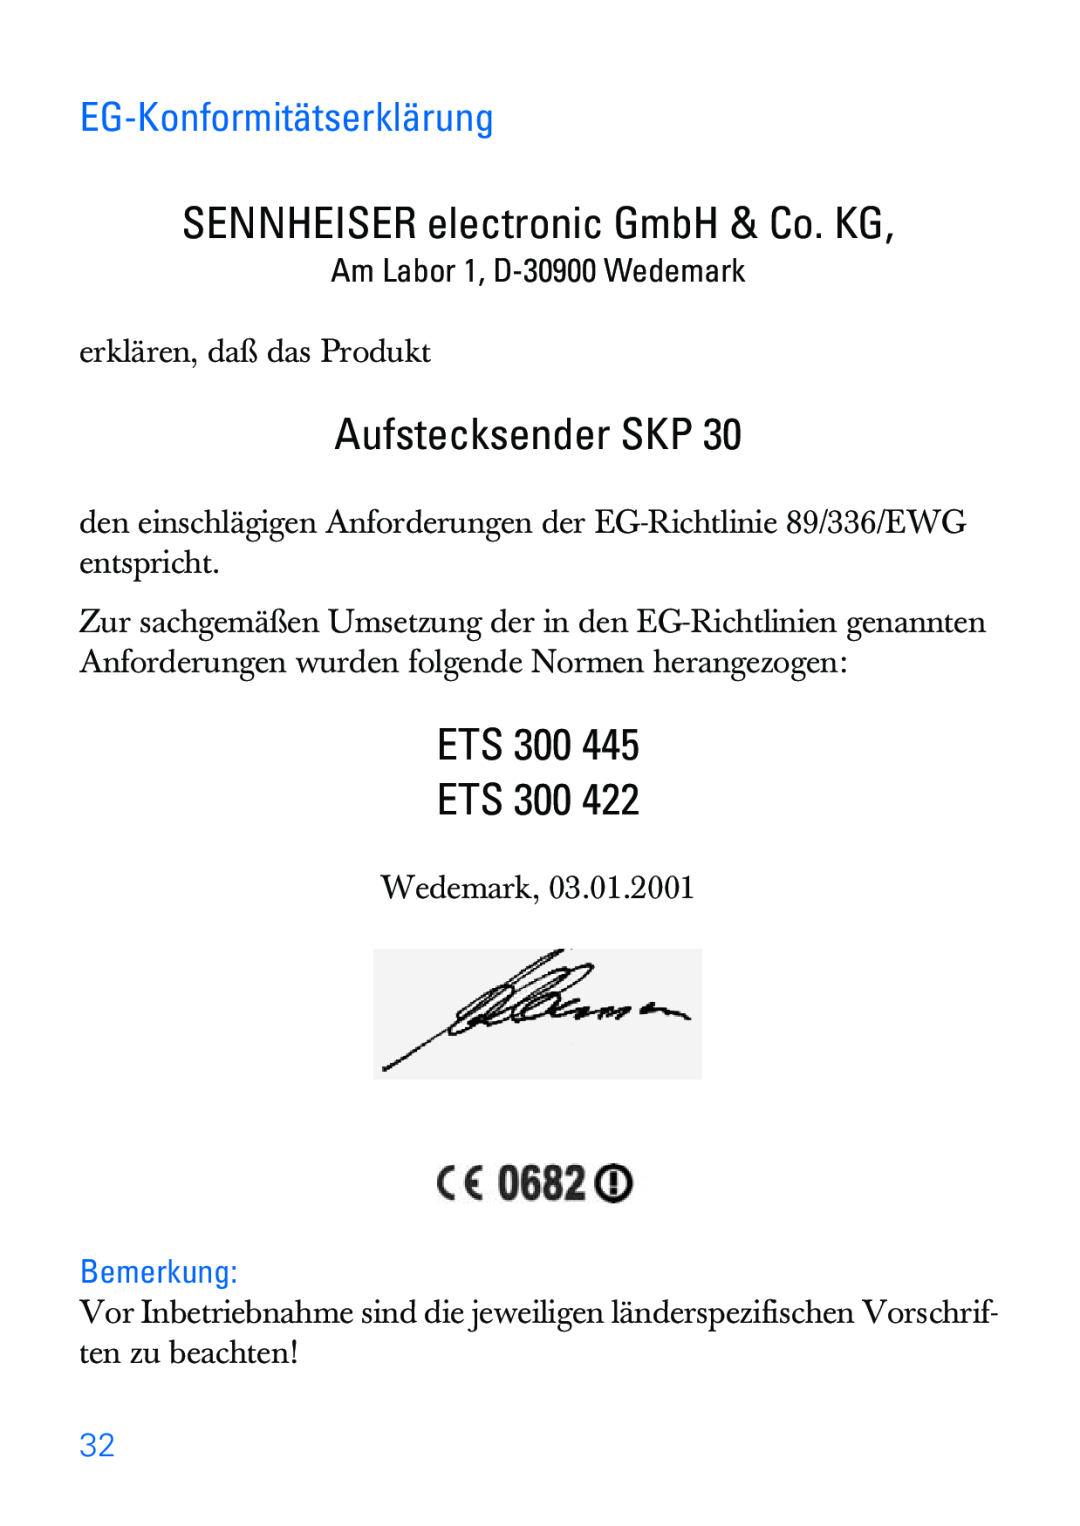 Sennheiser SKP 30 manual SENNHEISER electronic GmbH & Co. KG, Aufstecksender SKP, ETS 300 ETS 300, EG-Konformitätserklärung 